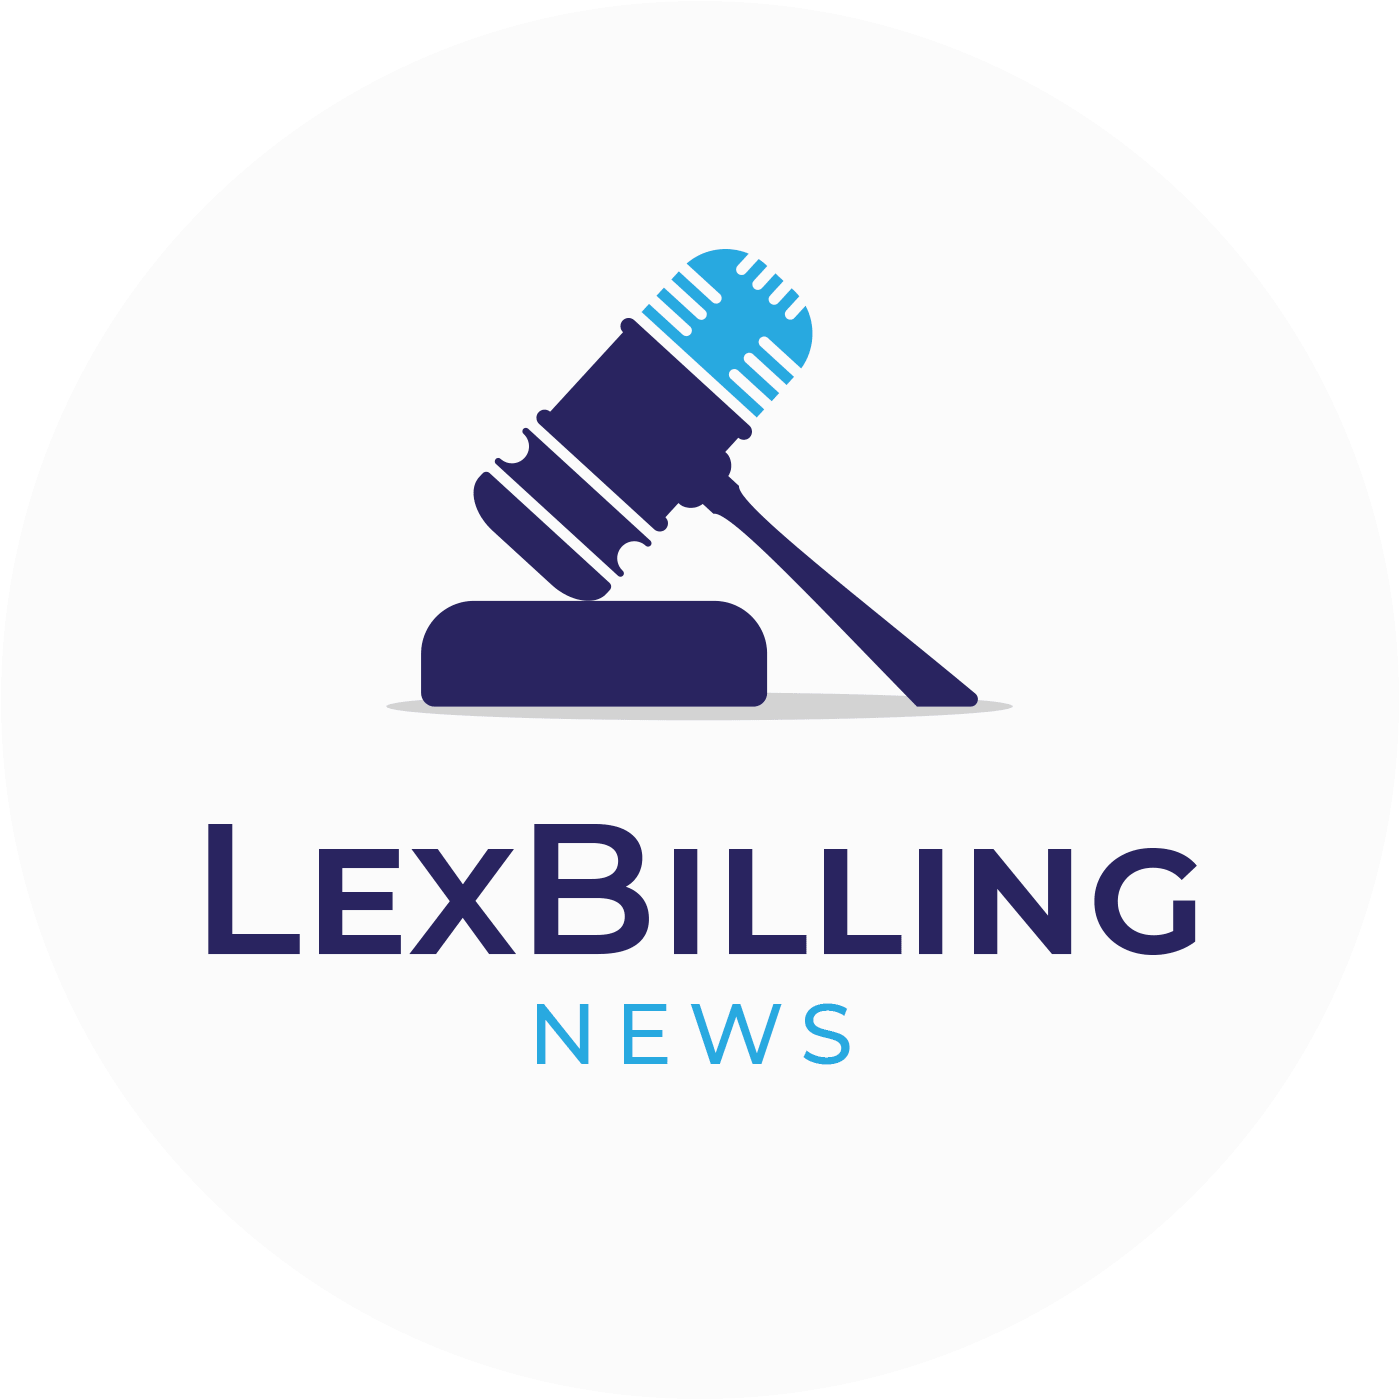 LexBilling News